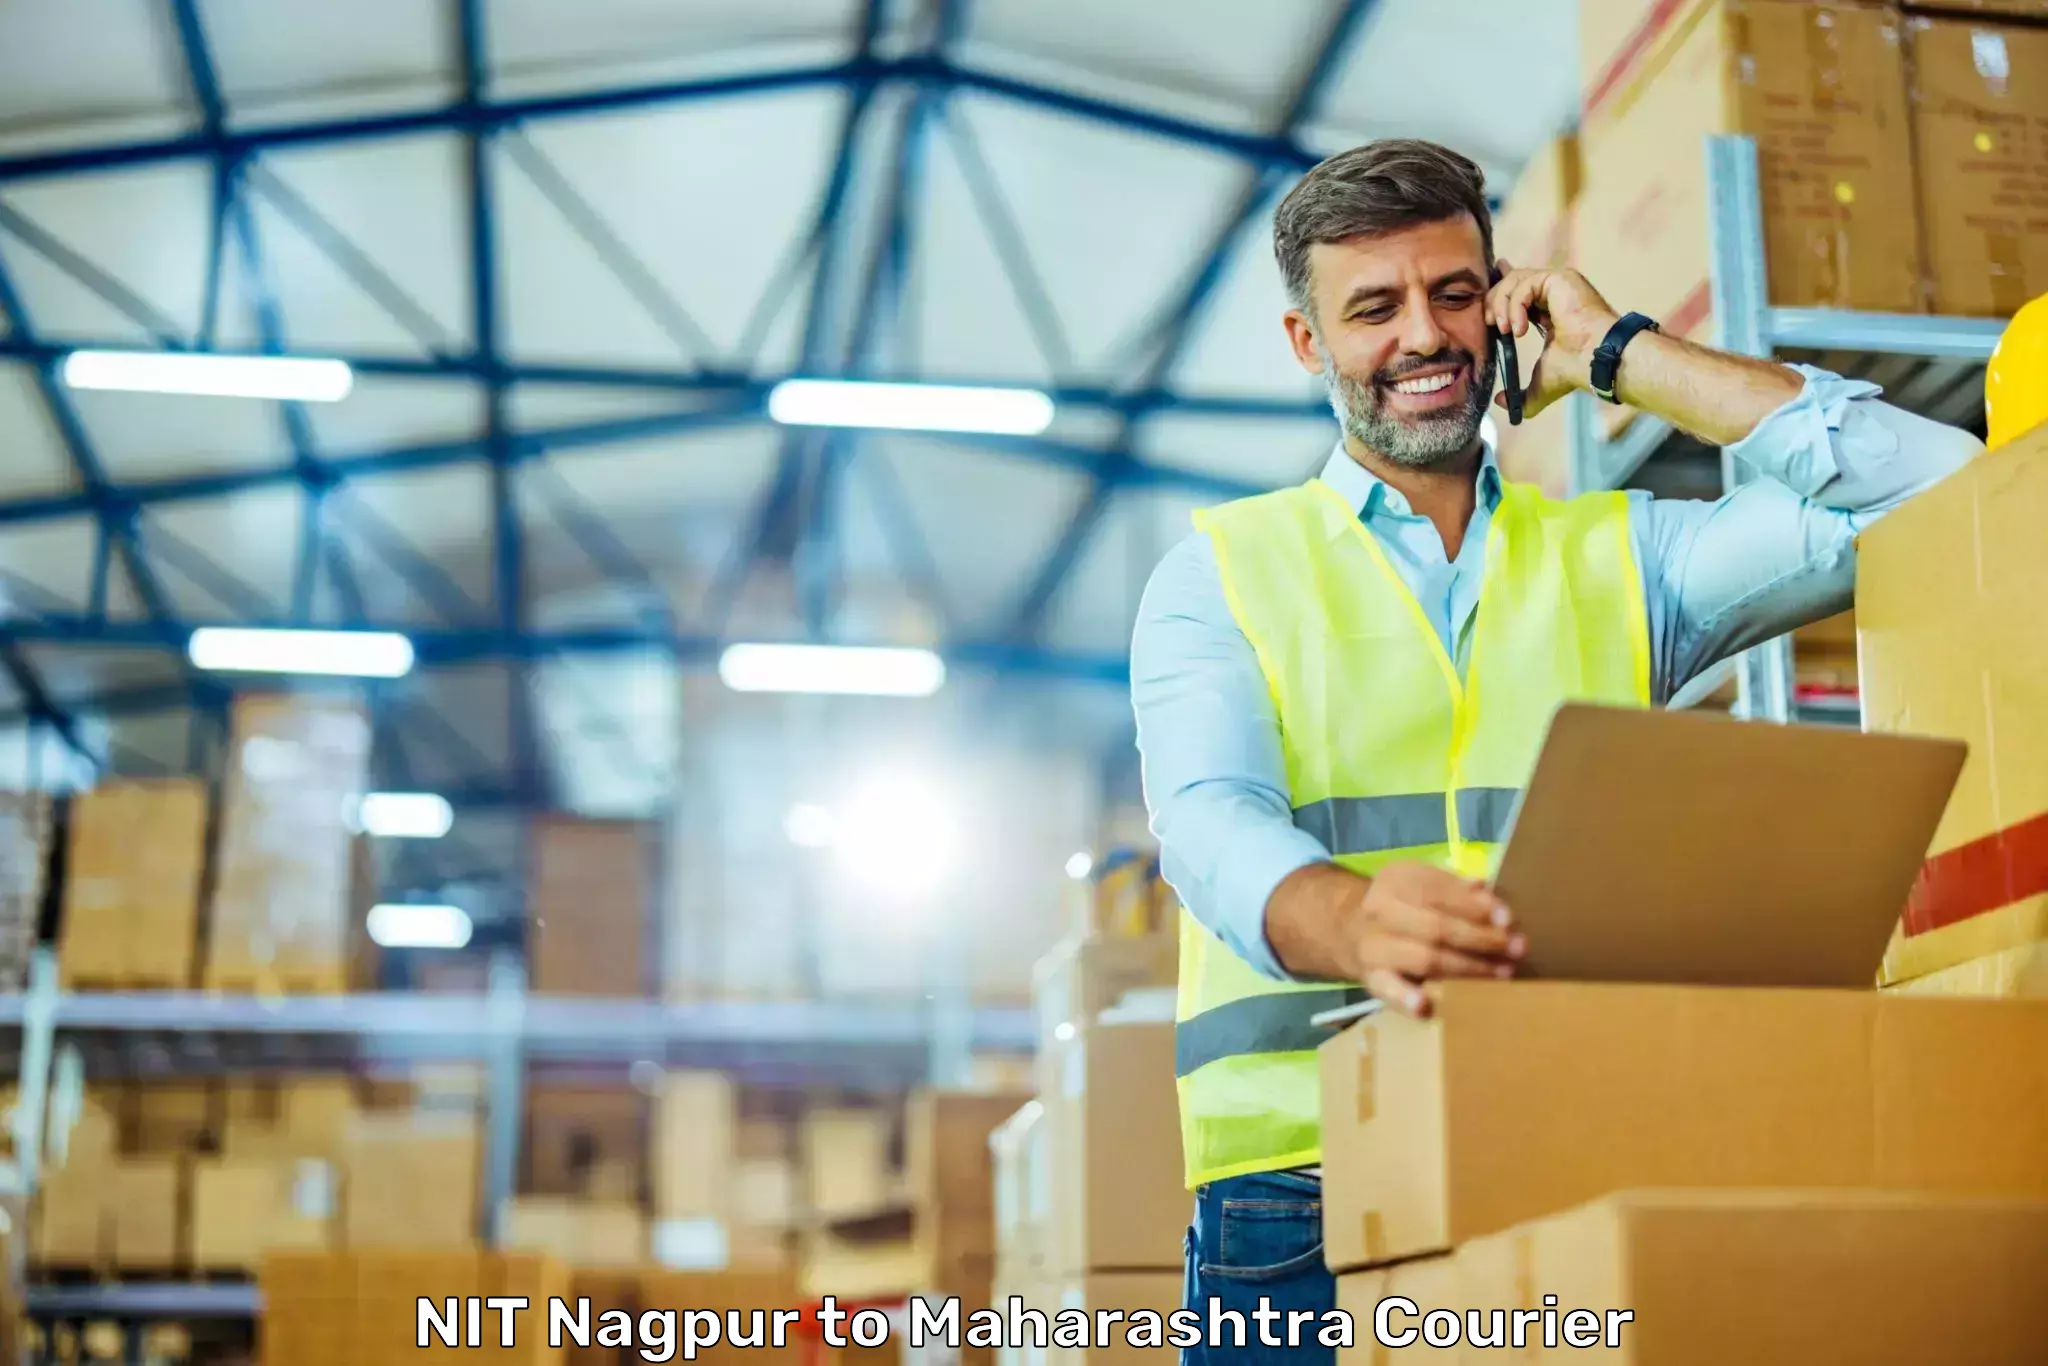 Cash on delivery service NIT Nagpur to Jawaharlal Nehru Port Nhava Sheva